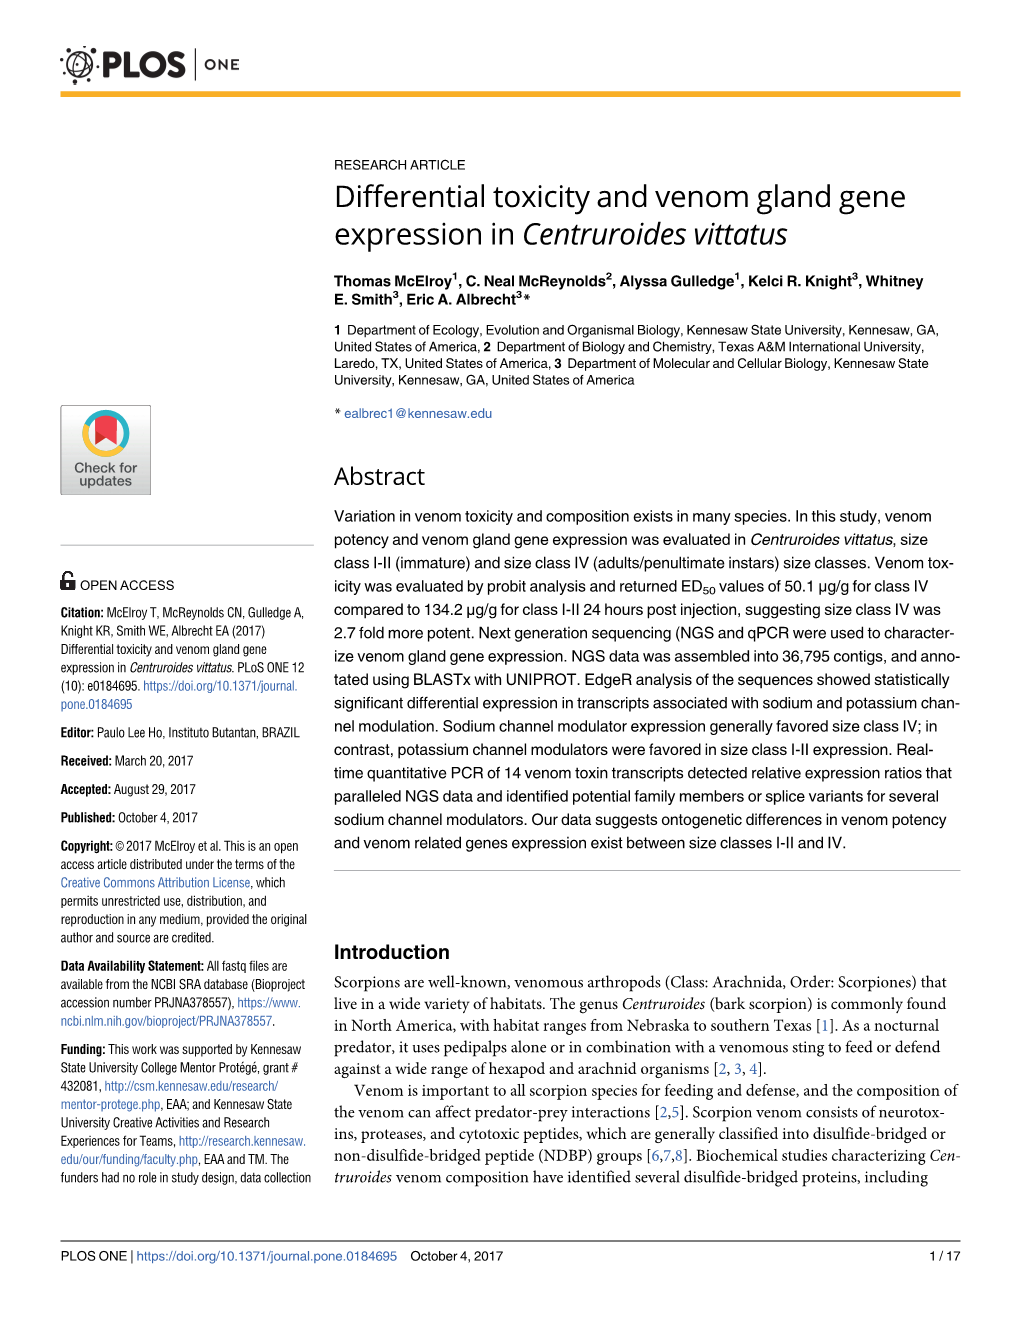 Differential Toxicity and Venom Gland Gene Expression in Centruroides Vittatus